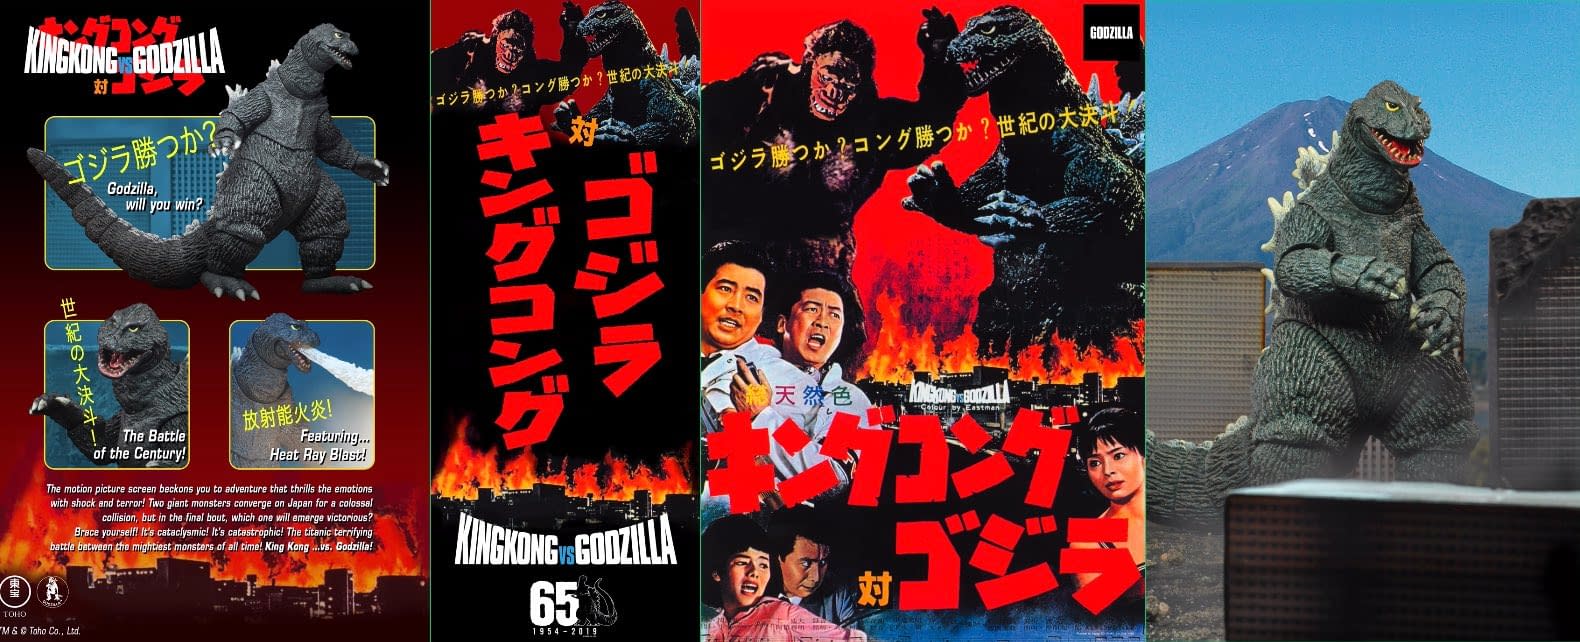 NECA Godzilla 1962 Package